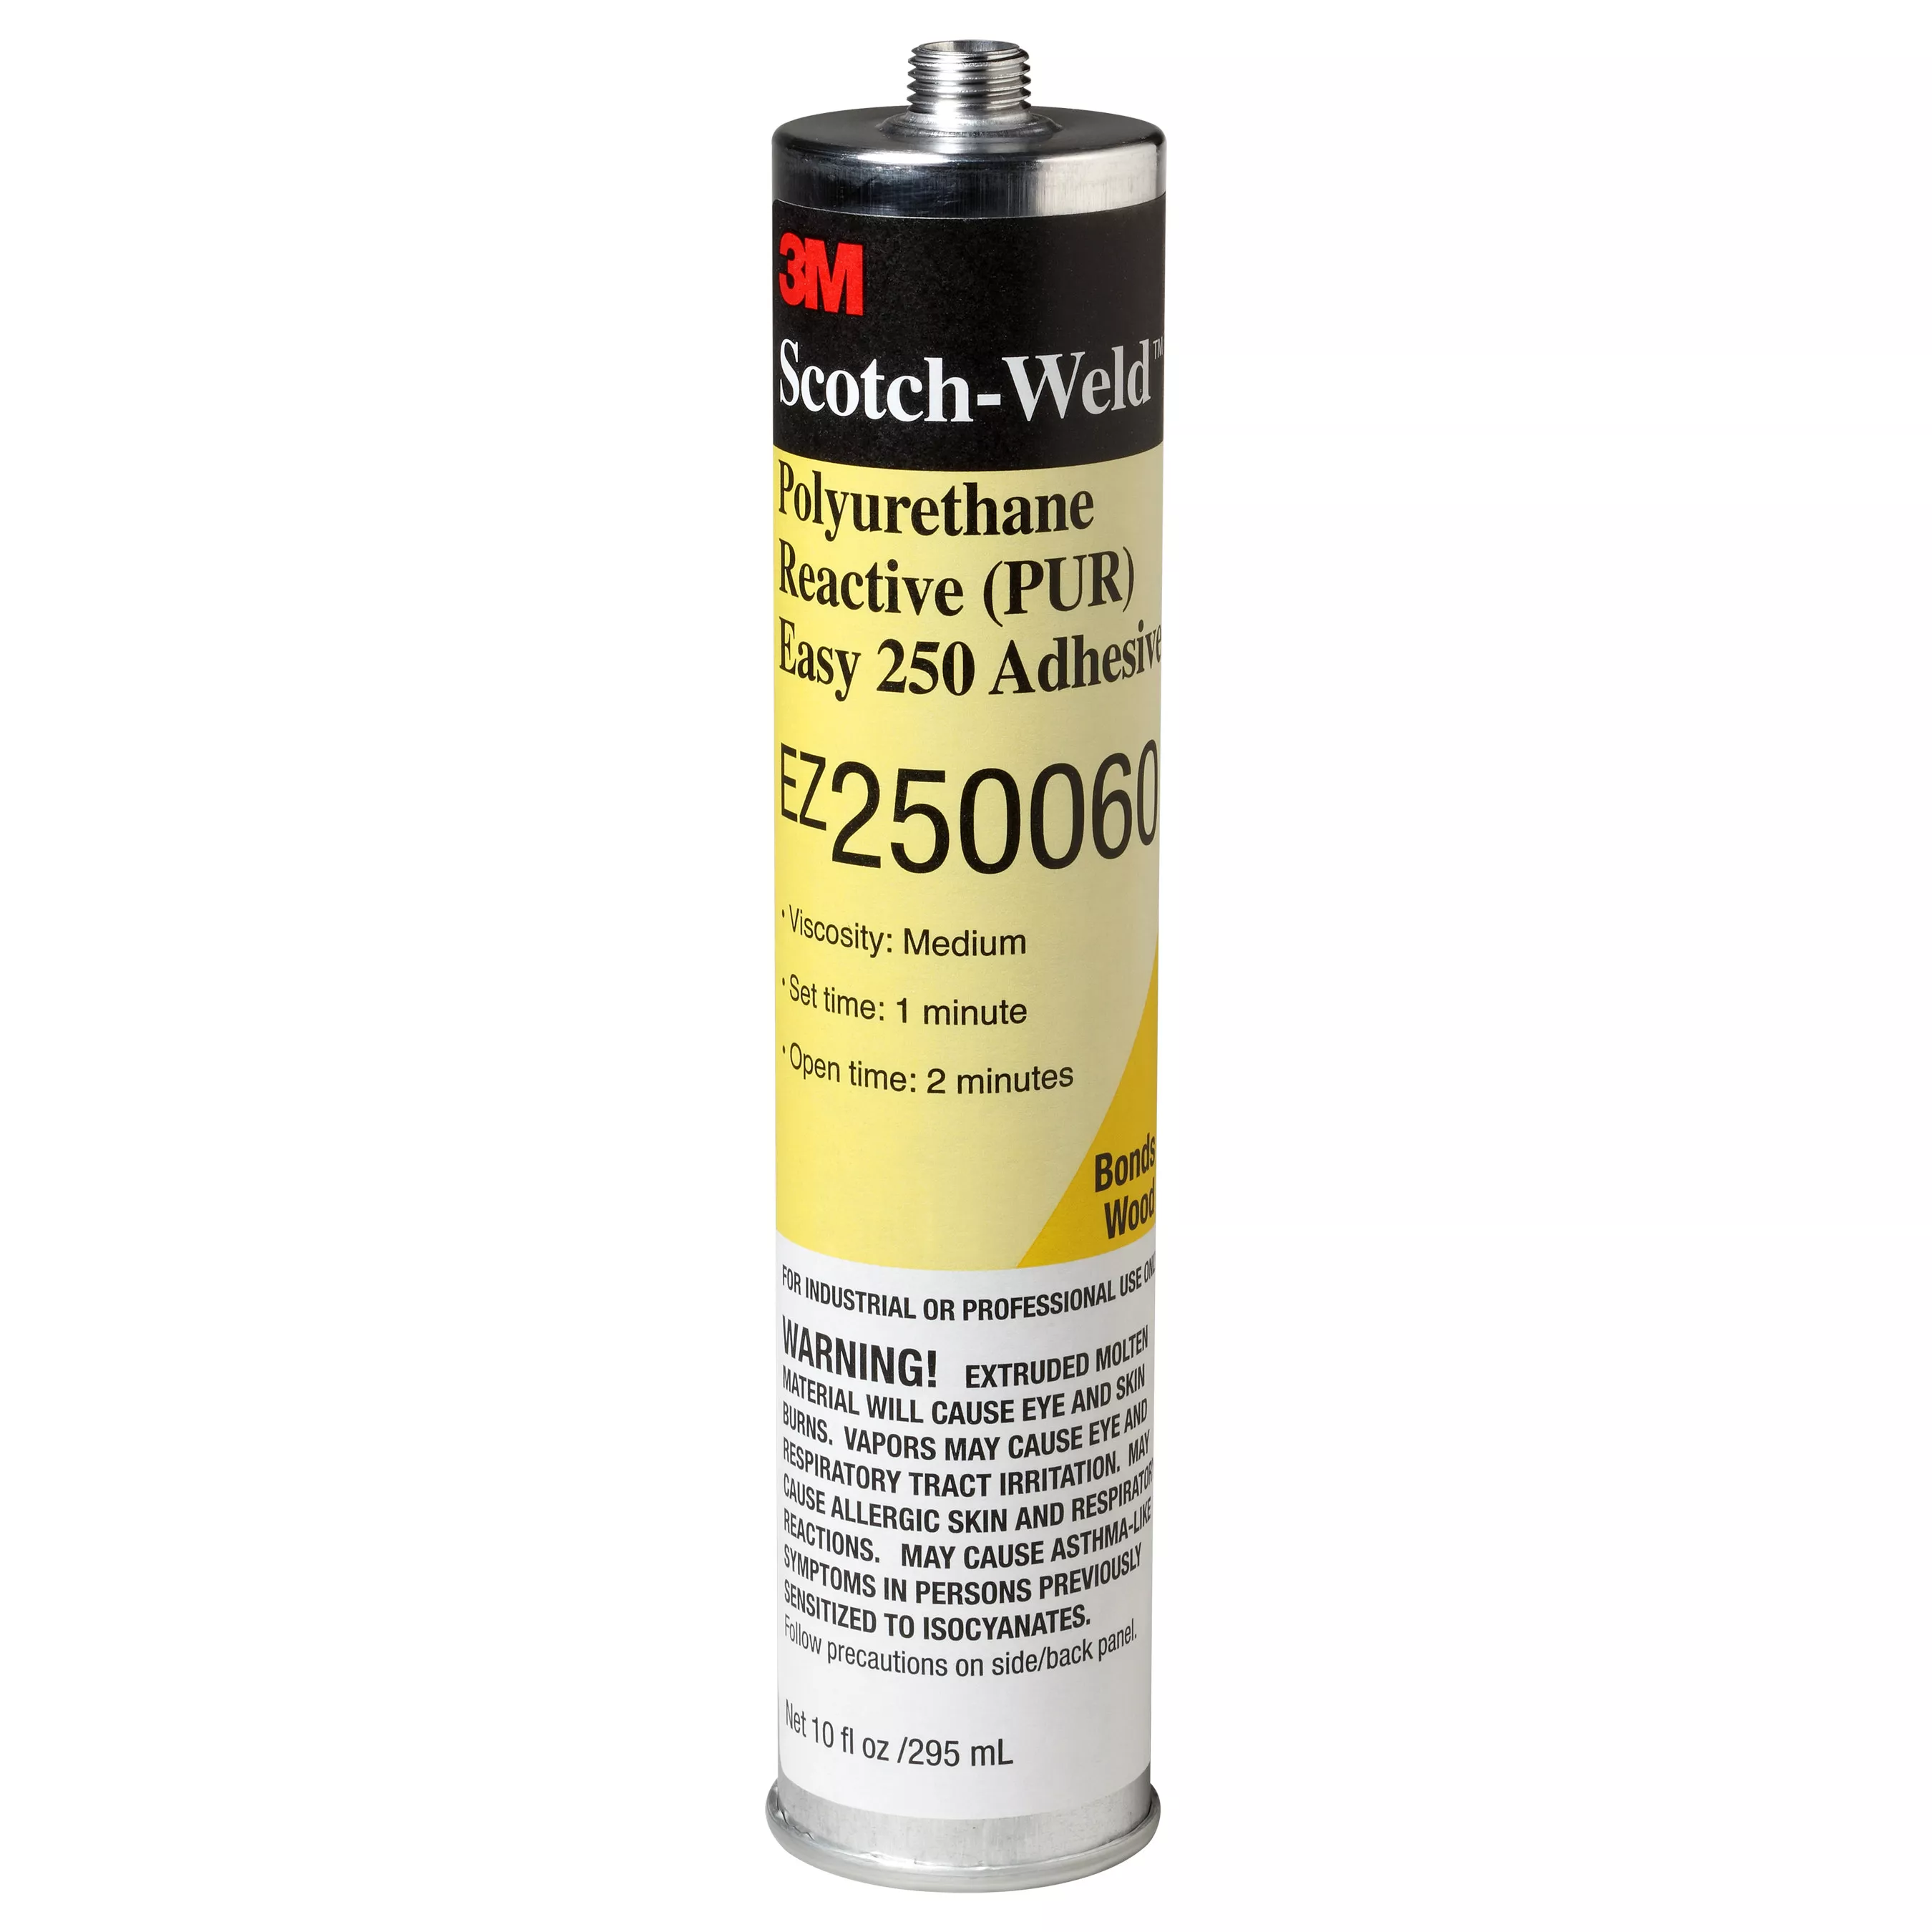 3M™ Scotch-Weld™ PUR Adhesive EZ250060, Off-White, 1/10 Gallon Cartidge,
5 Each/Case